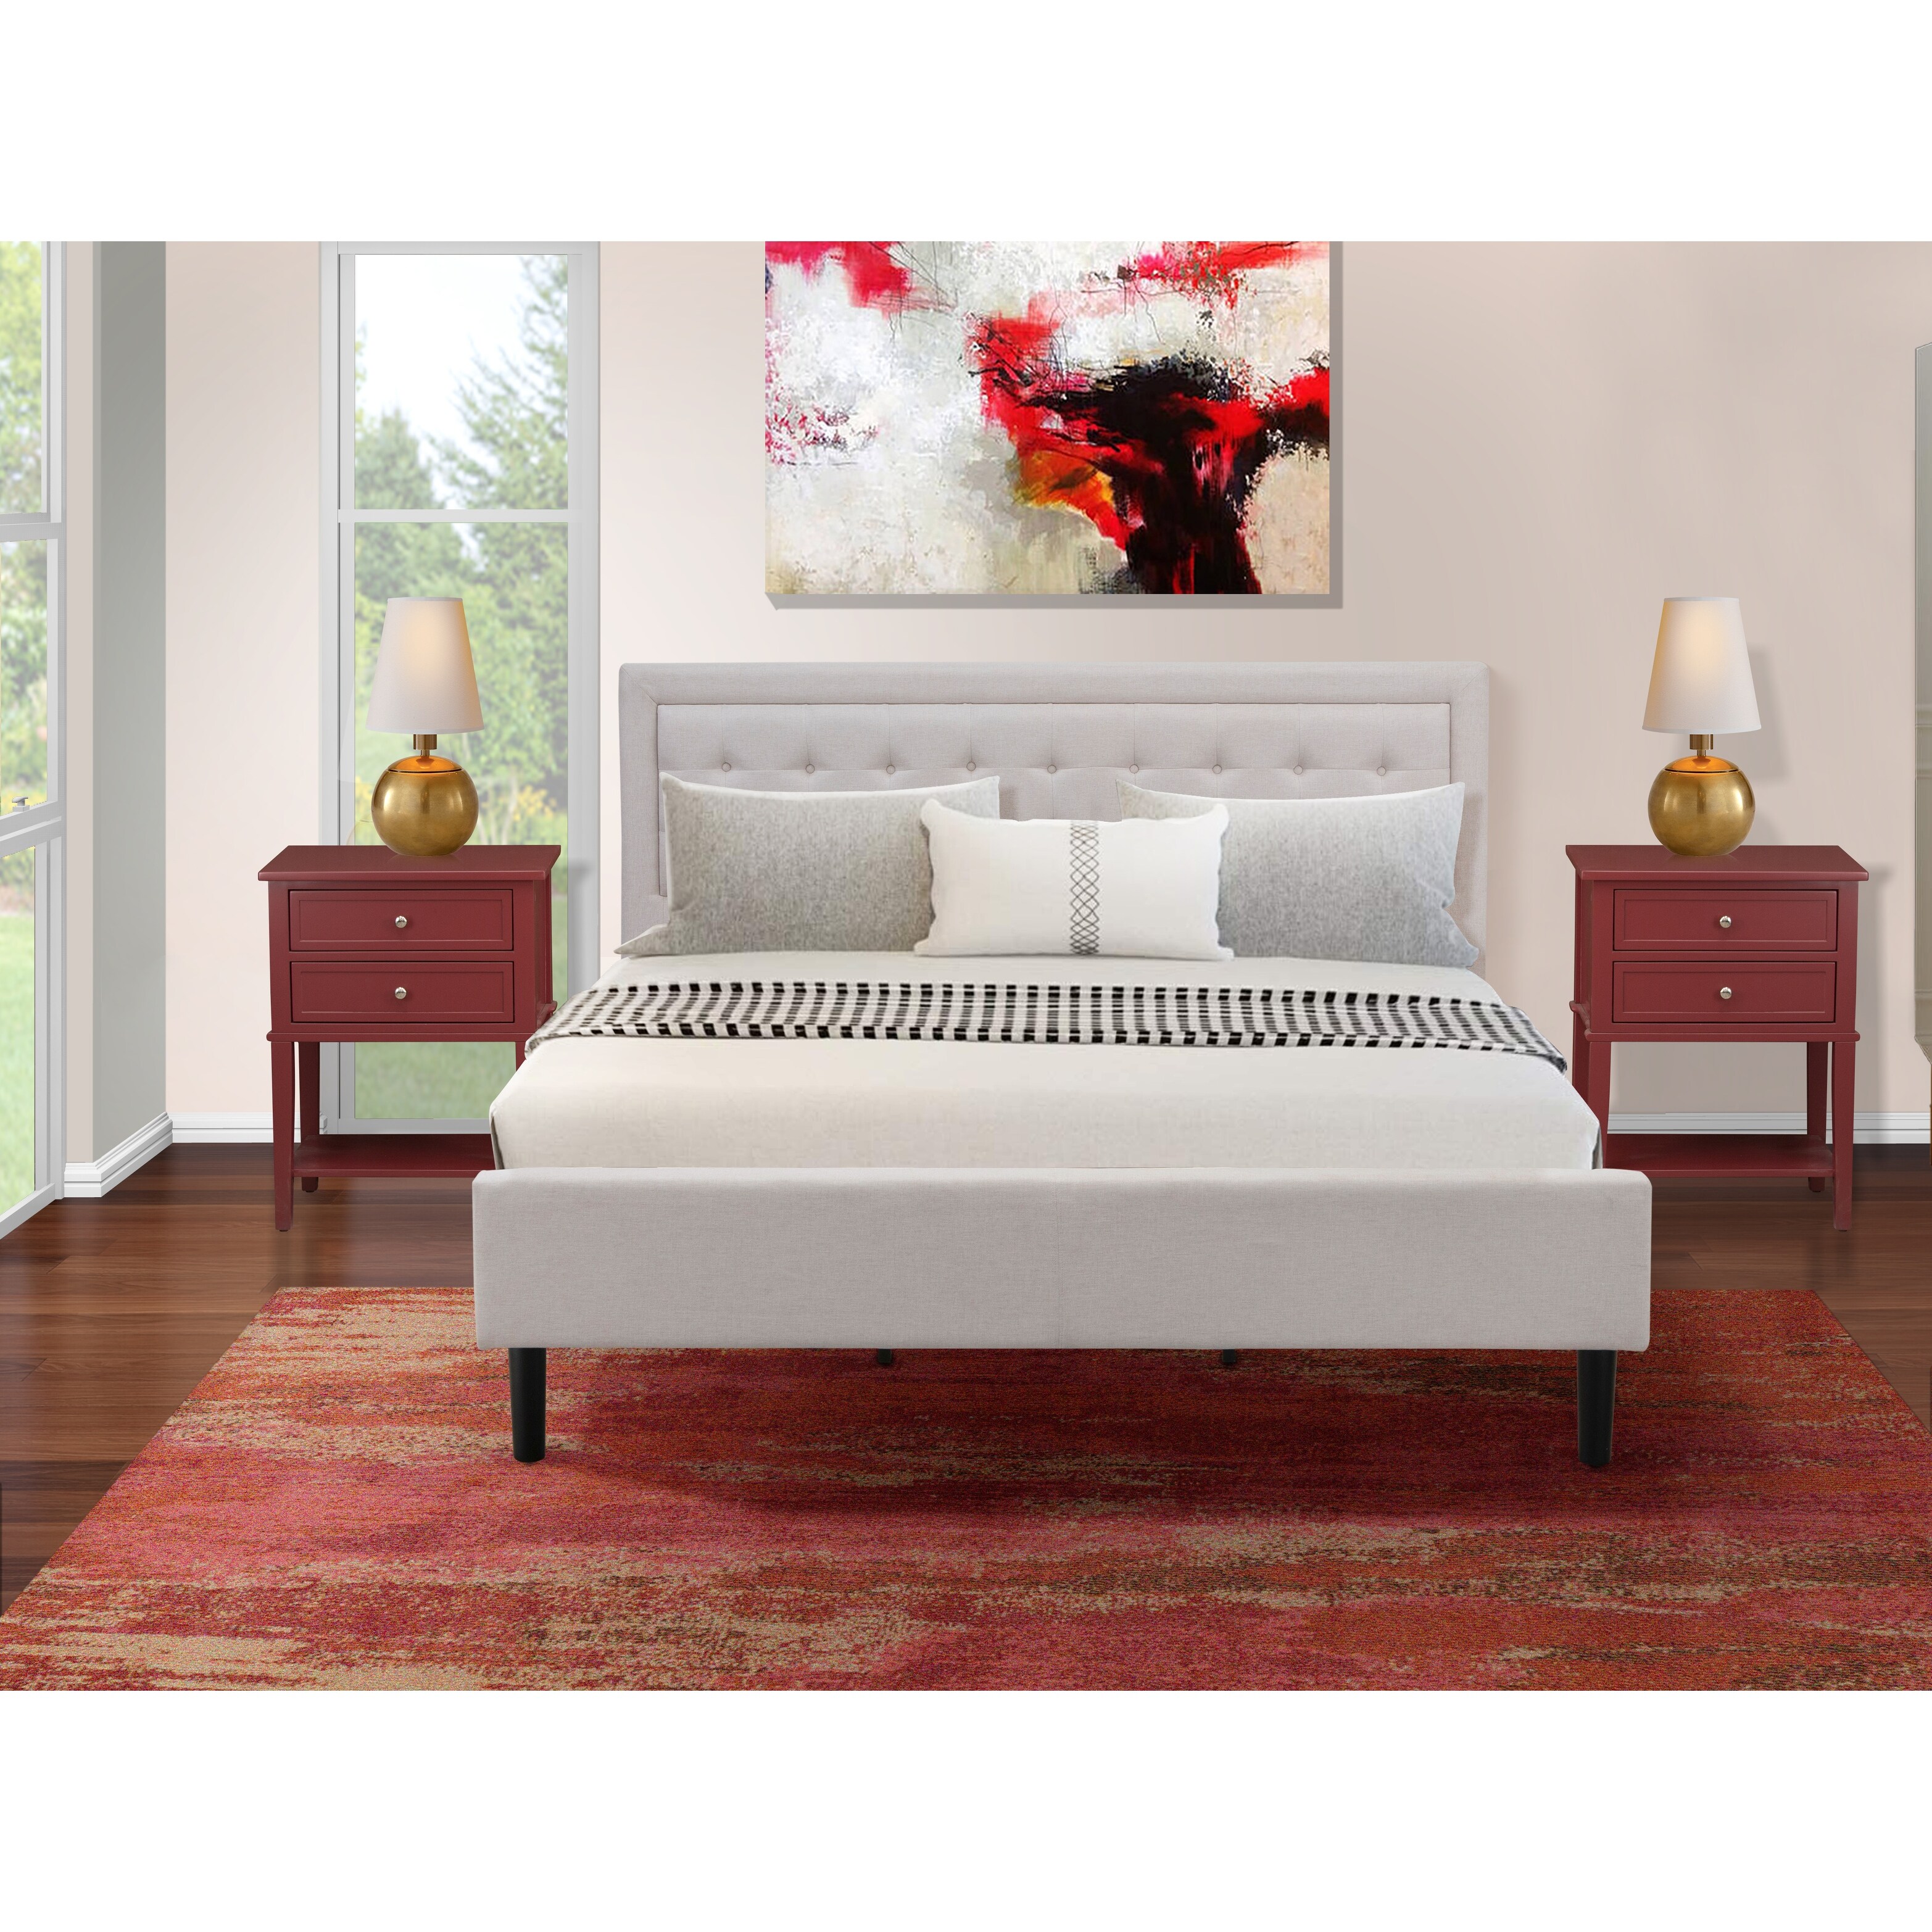 Fannin Wooden Set For Bedroom With 1 Platform Bed And Mid Century Modern Nightstand - Mist Beige Linen Fabric(pieces Options)